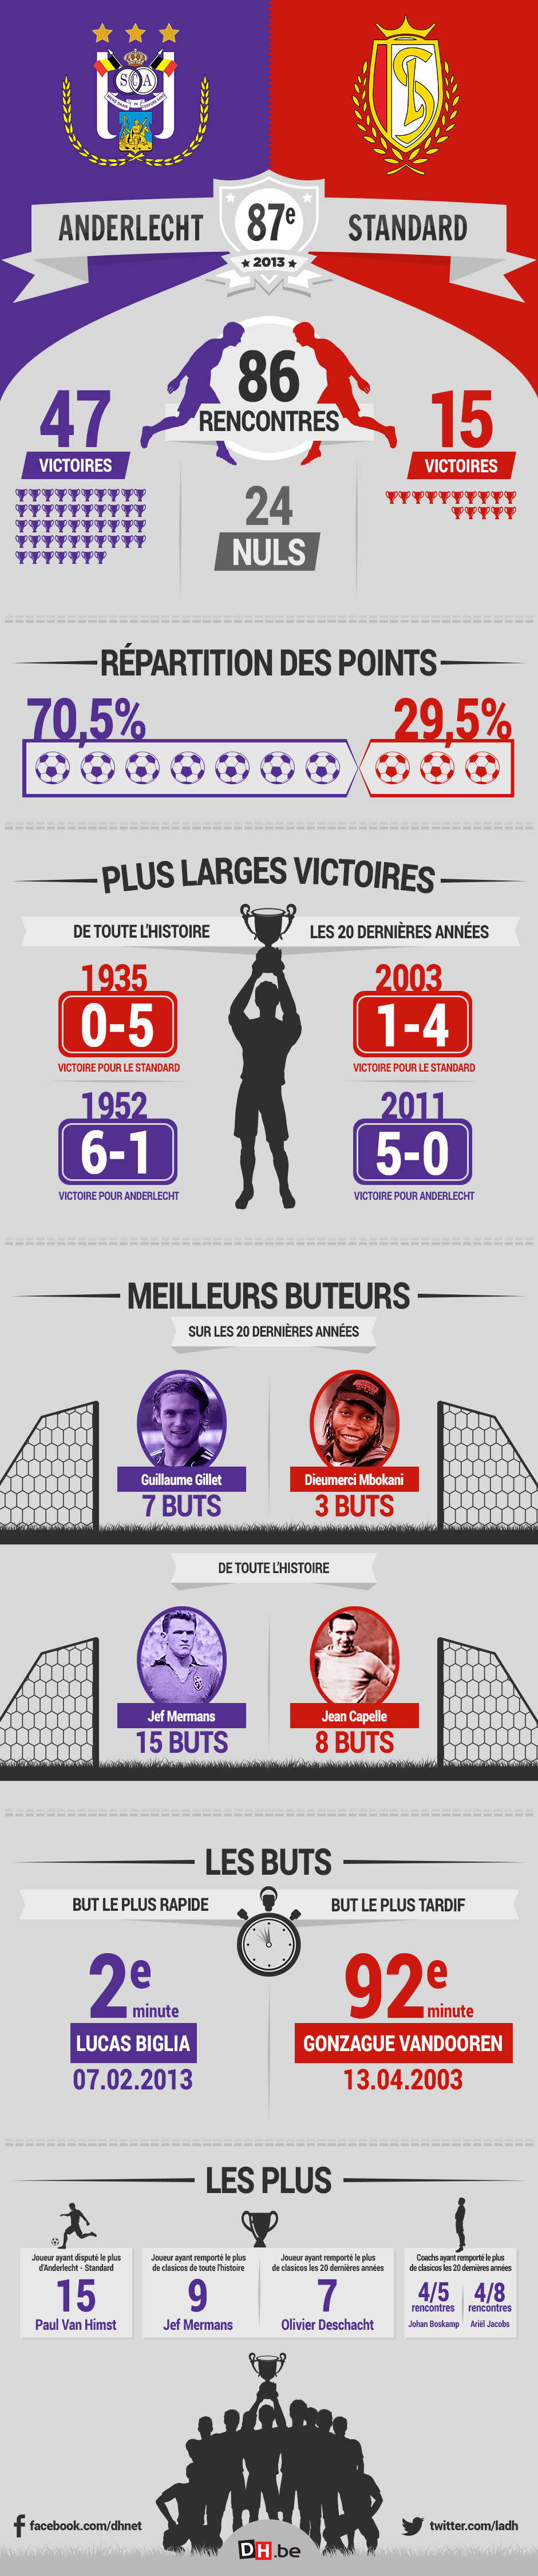 sport design Infographie football belgique Anderlecht standard informations